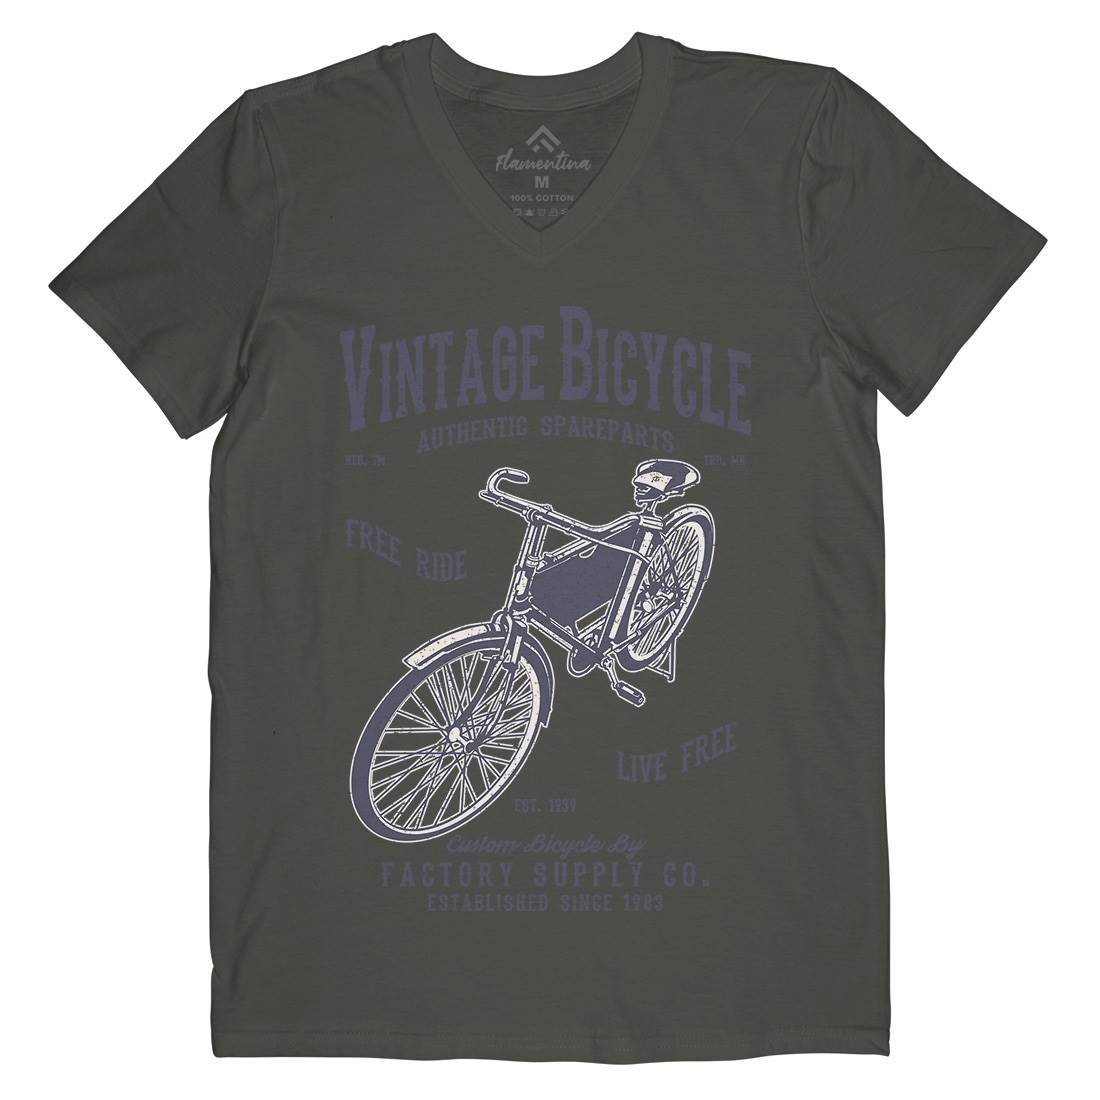 Vintage Bicycle Mens V-Neck T-Shirt Bikes A784